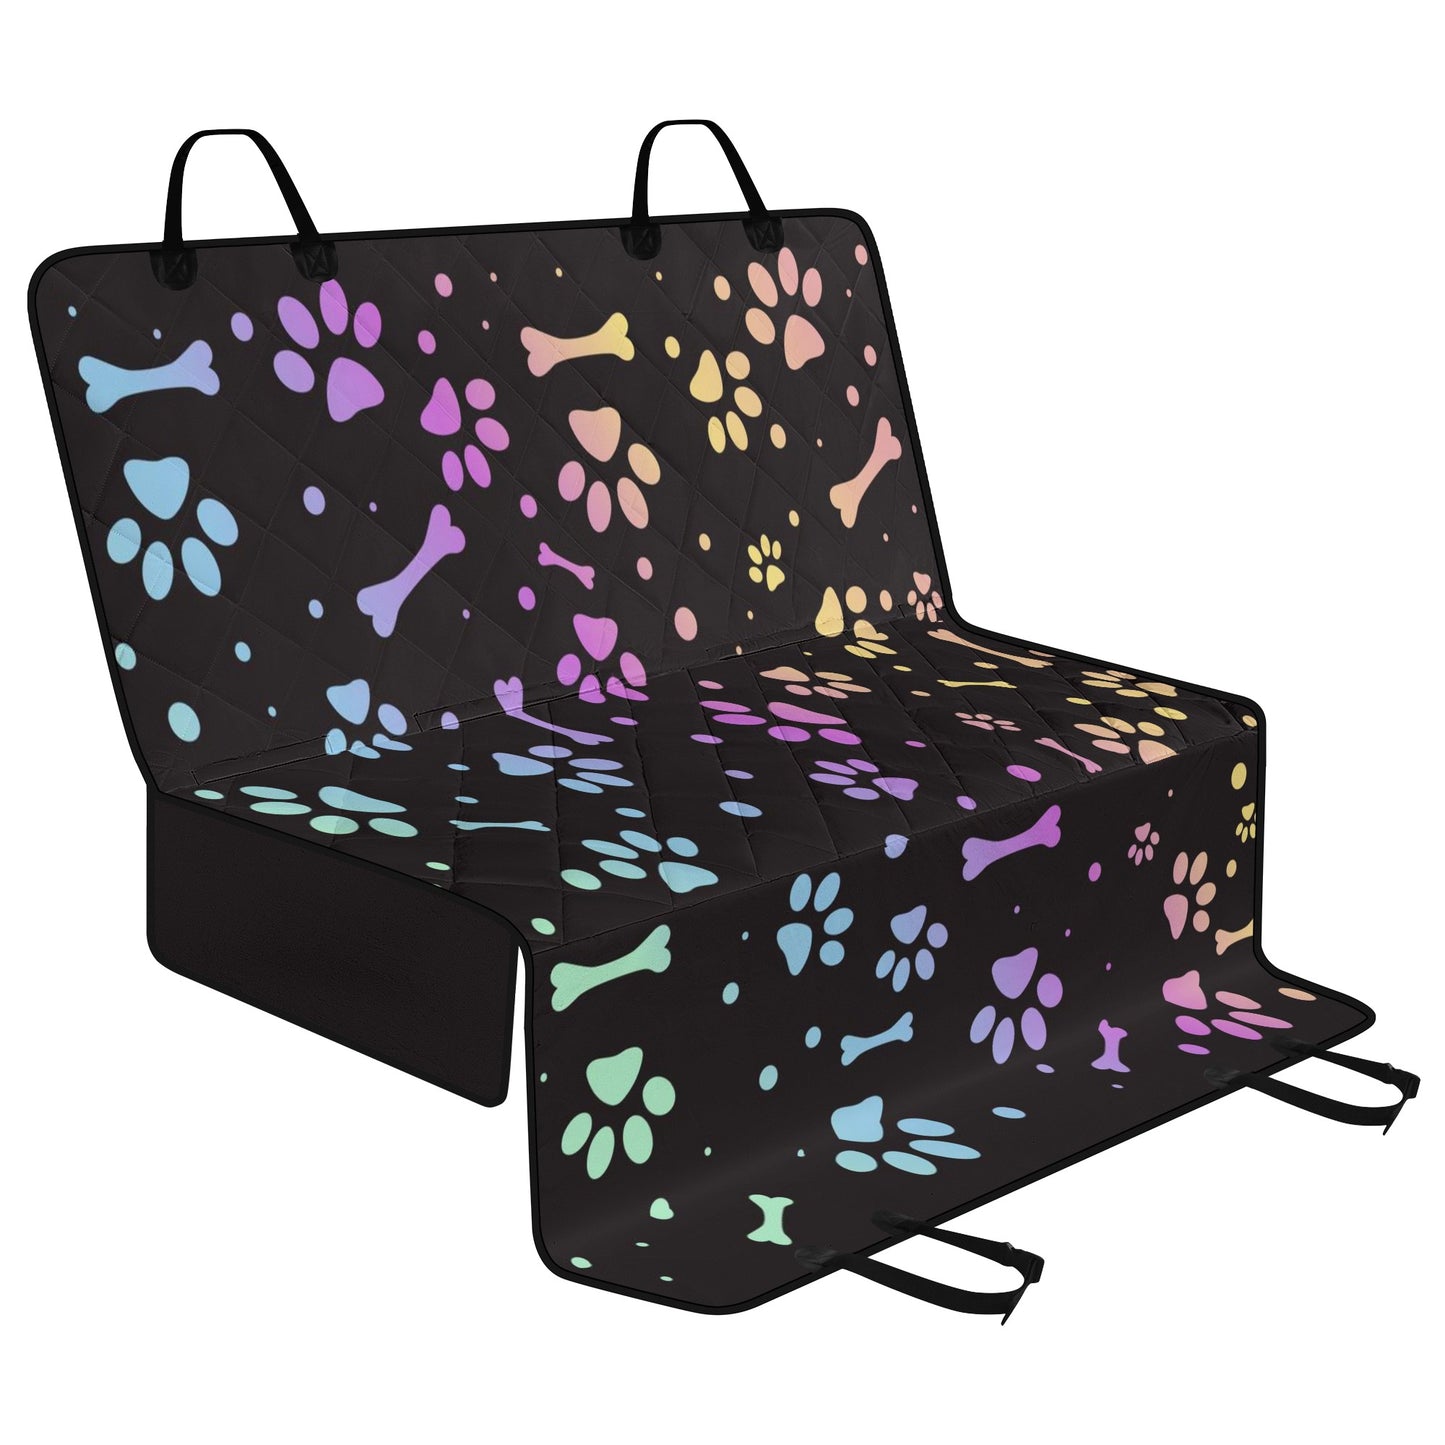 Colorful Backseat Car Pet Seat Covers